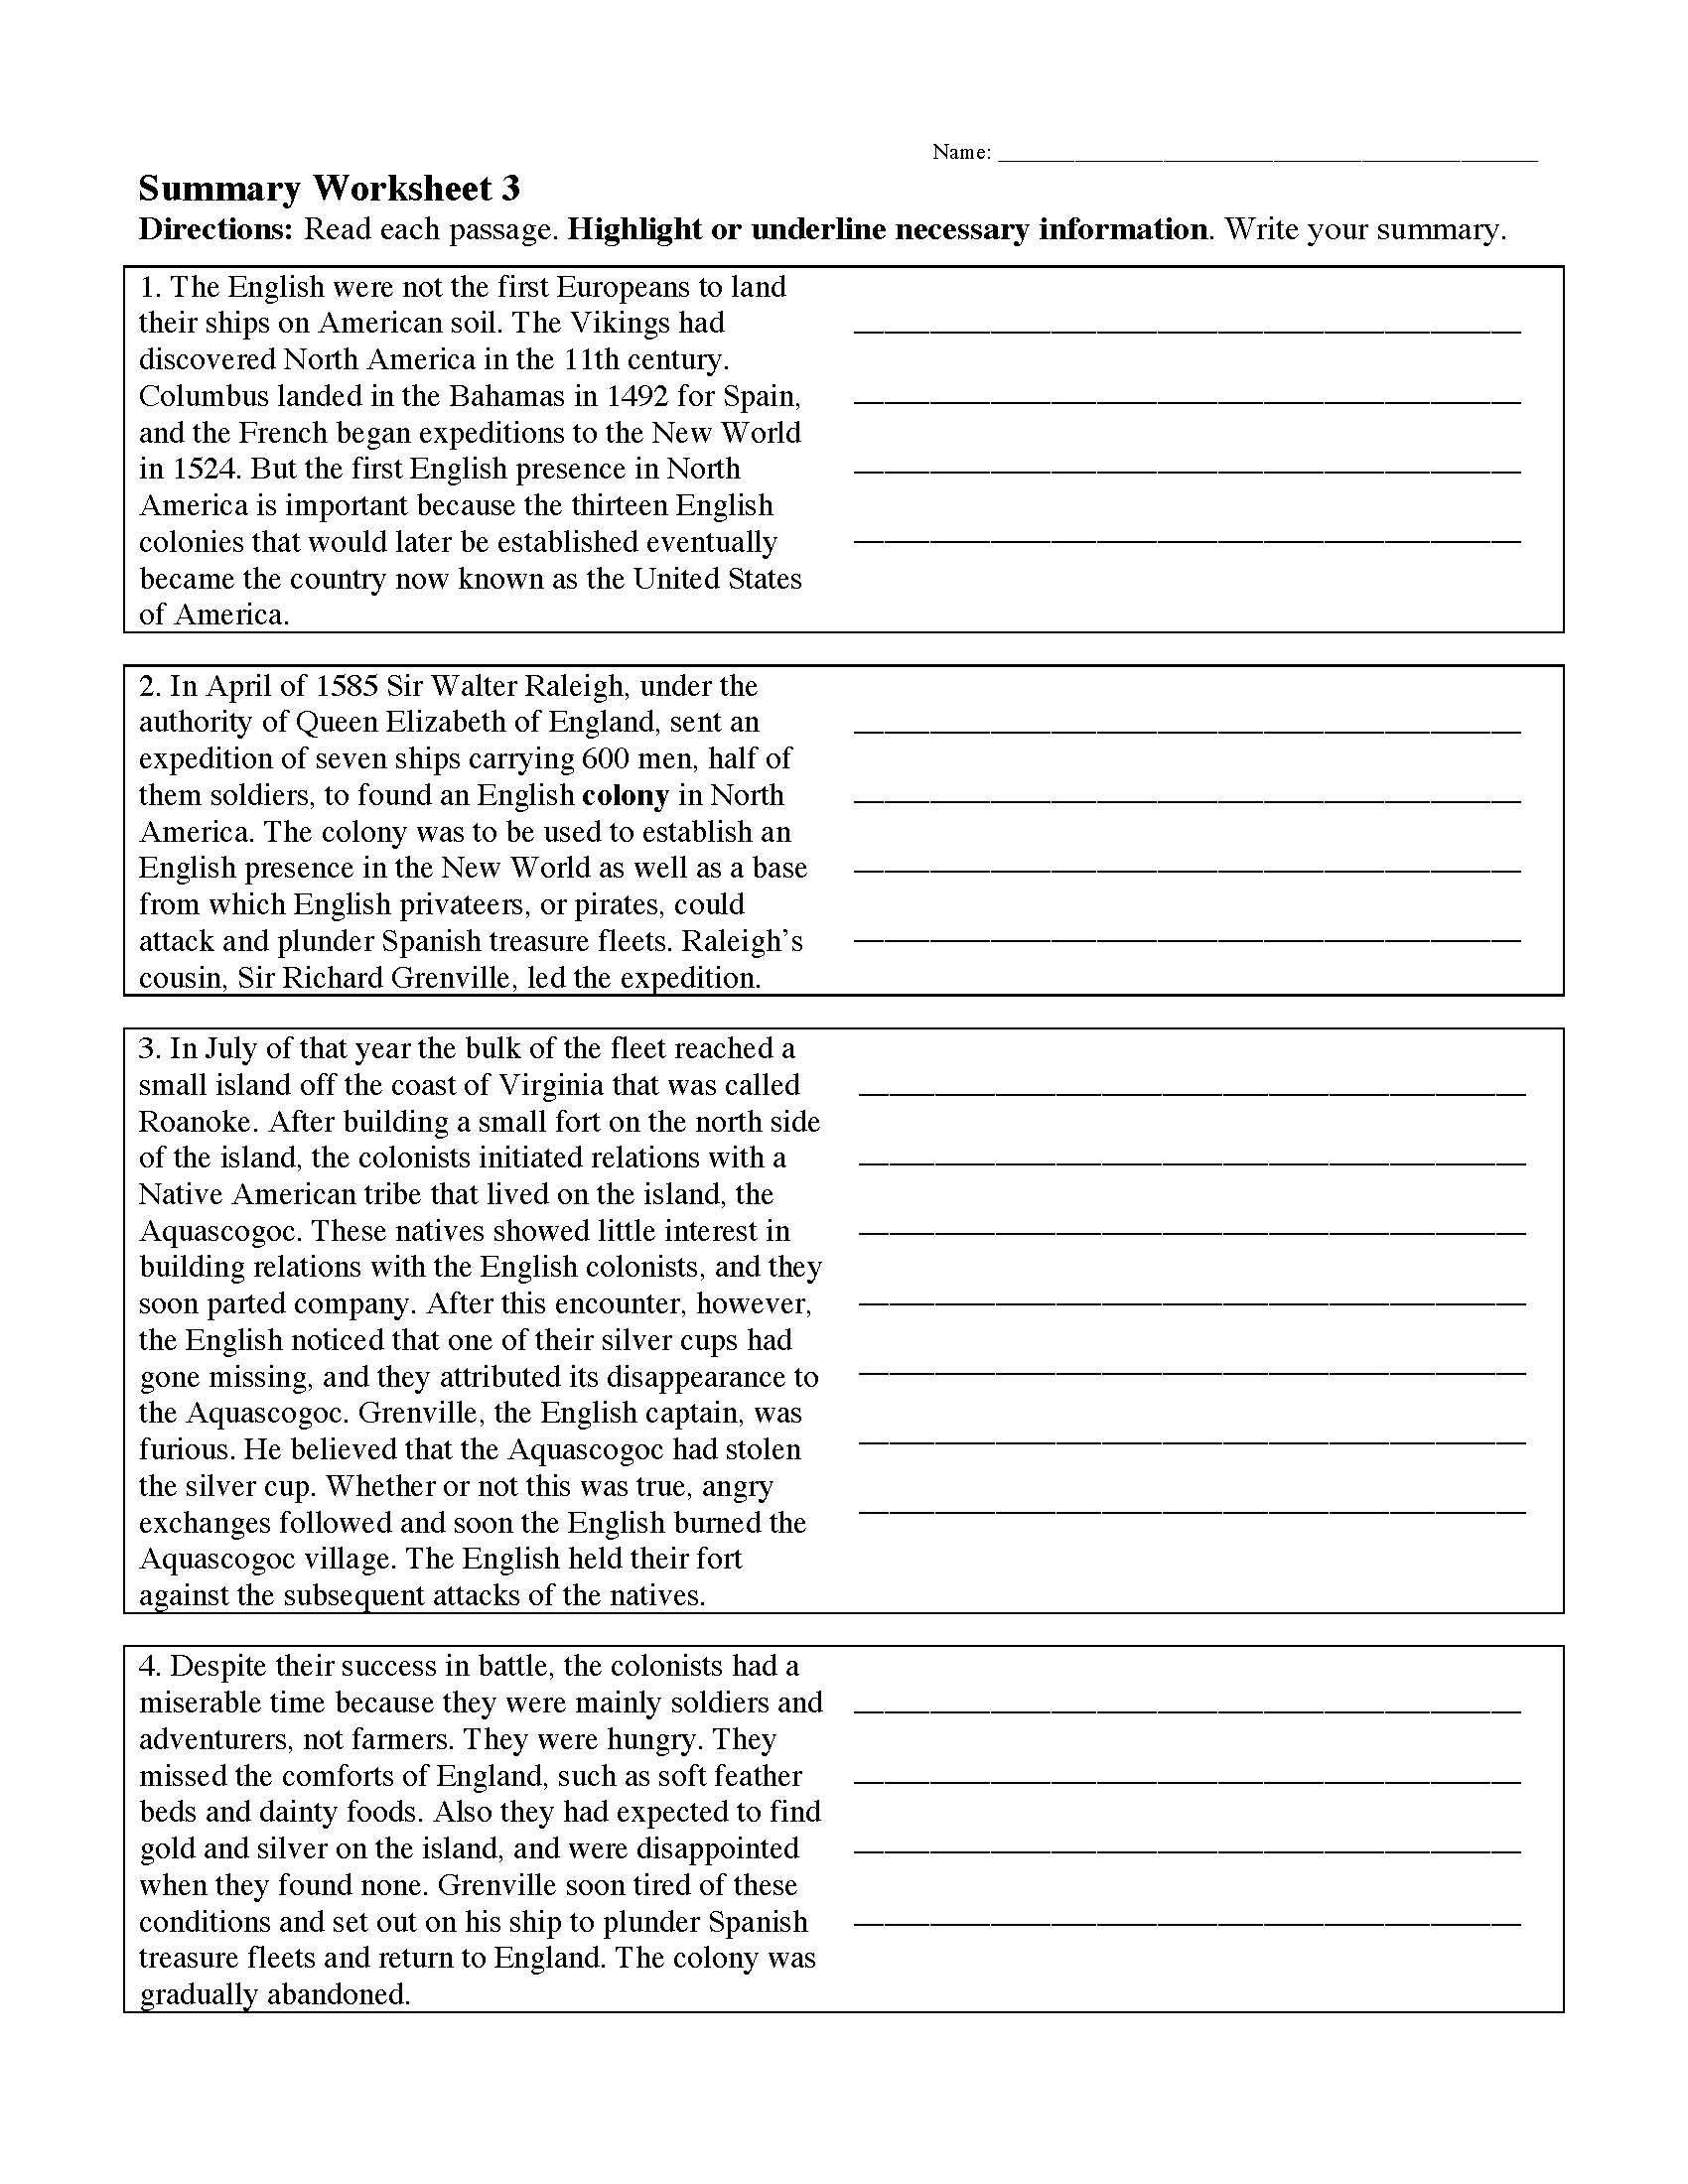 Summary Writing Worksheets 4th Grade Writing Worksheets Free Download